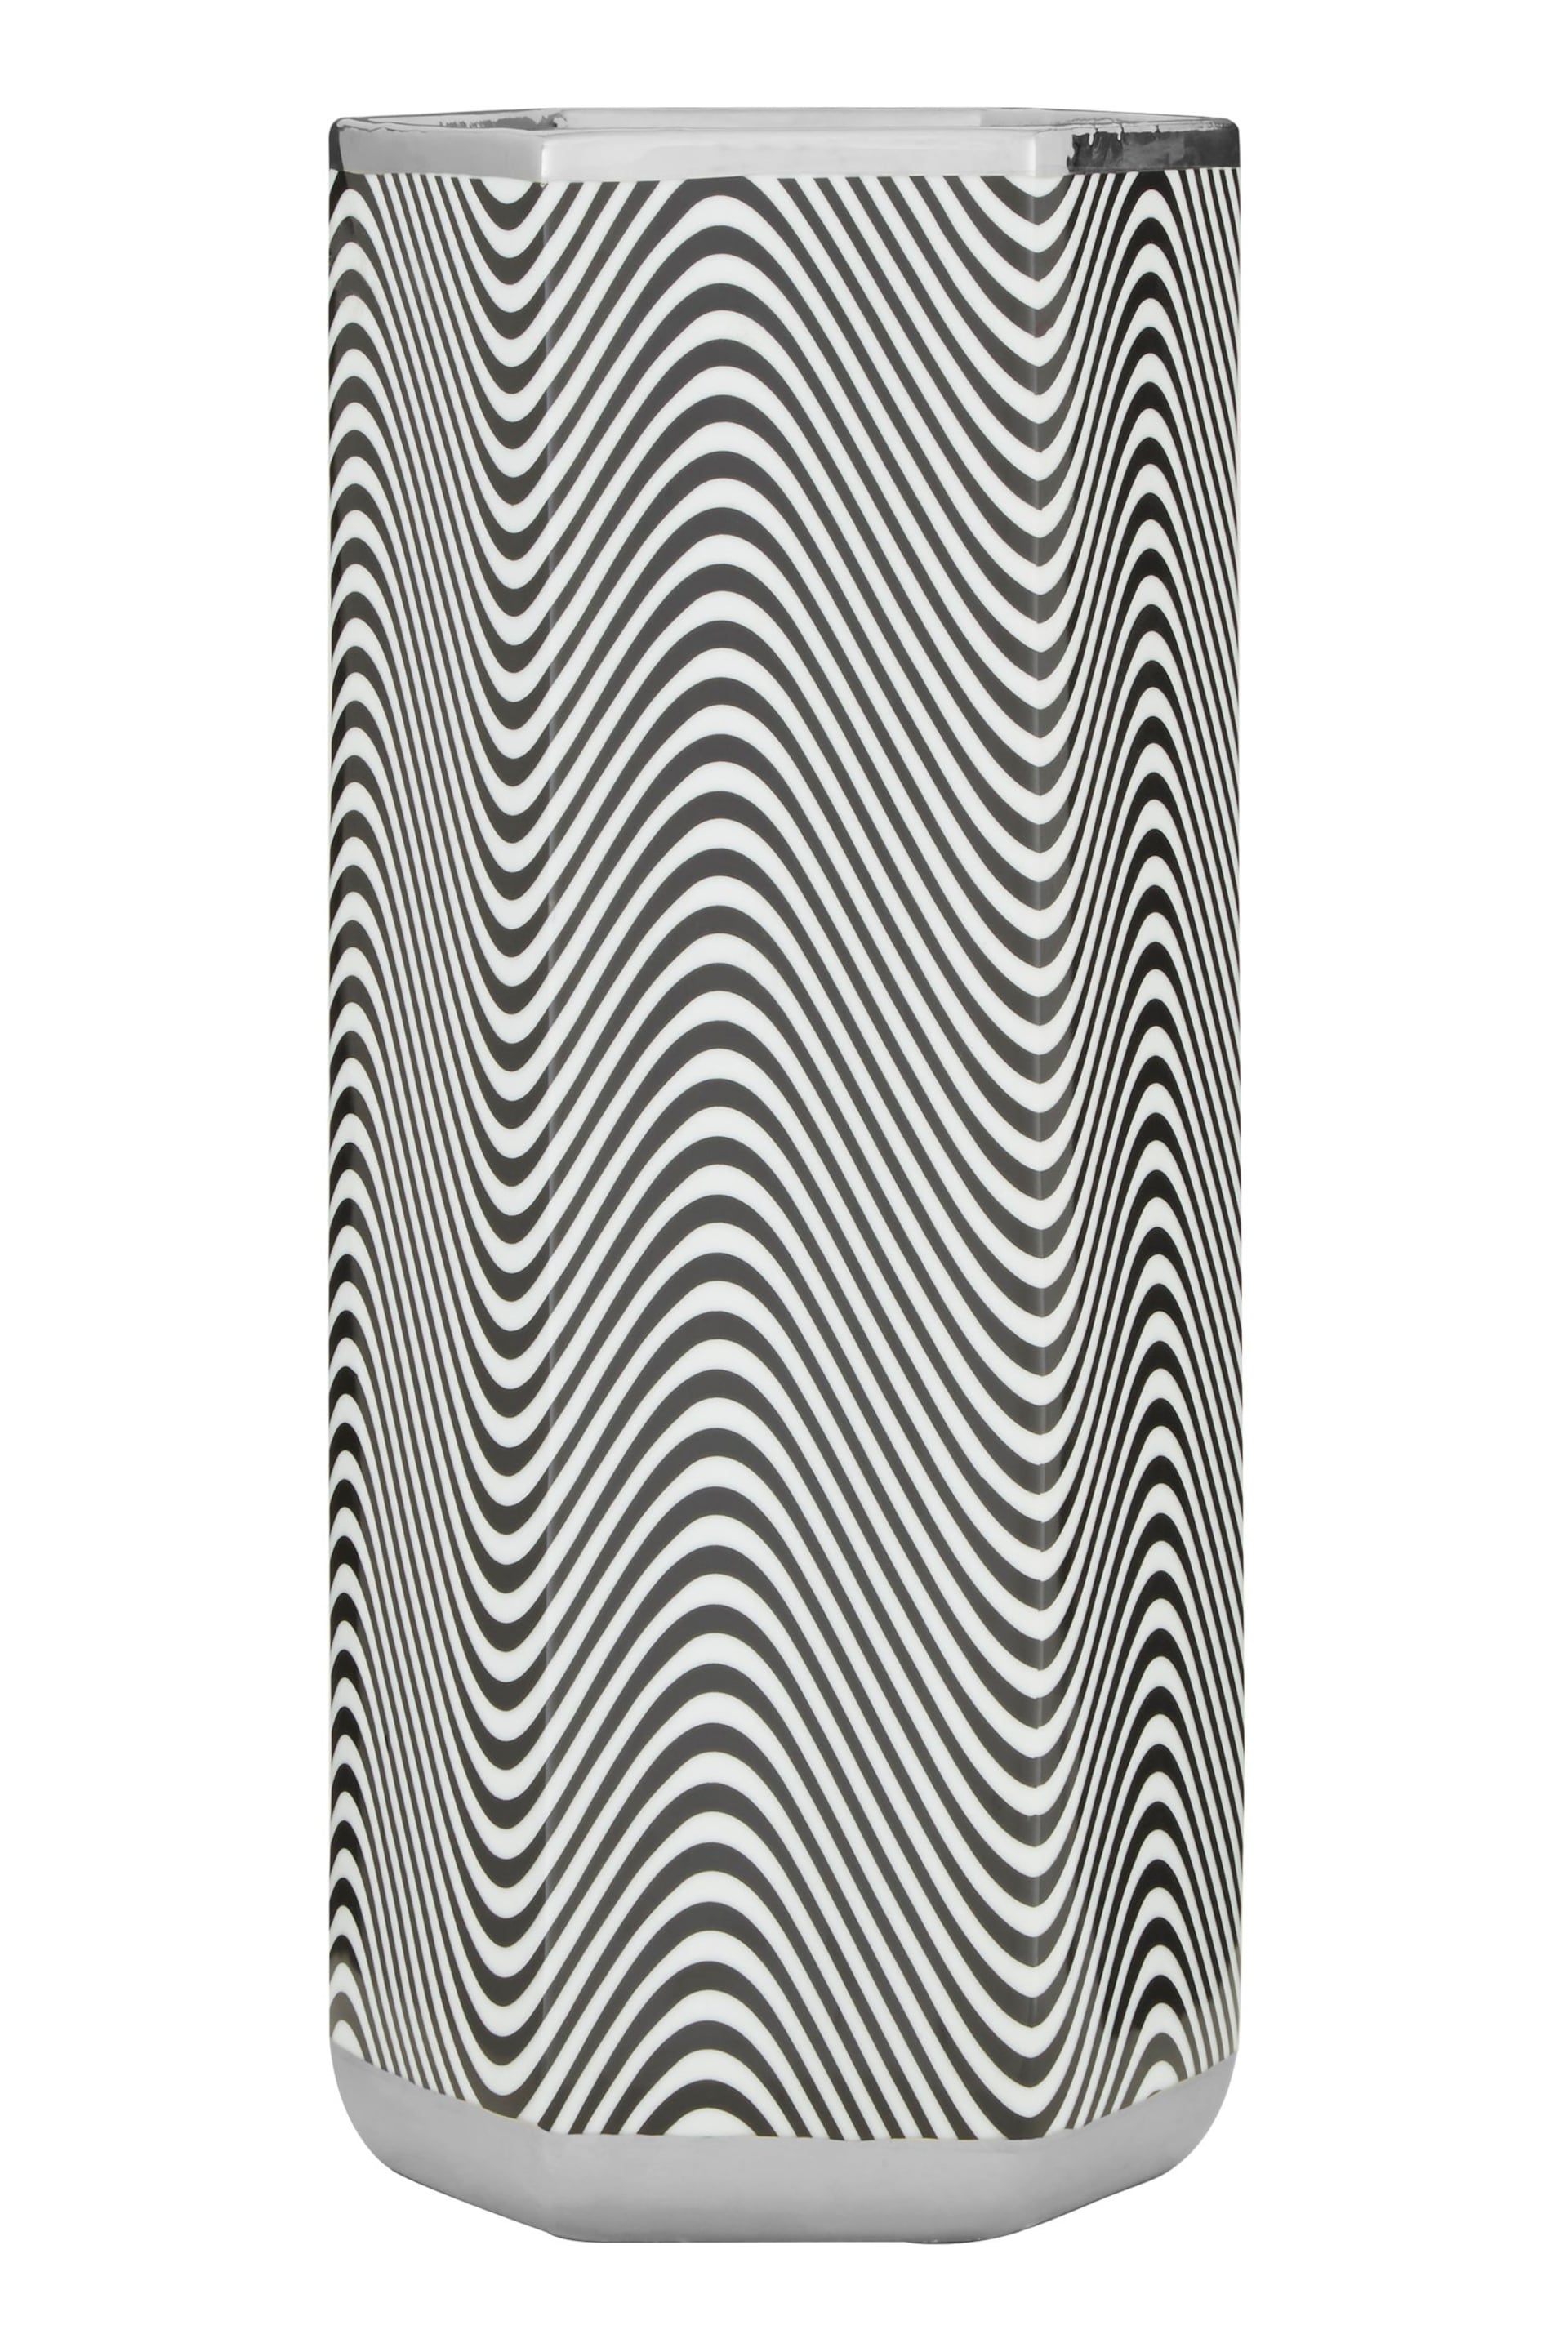 Fifty Five South Grey Hexagon Ceramic Umbrella Stand - Image 2 of 4